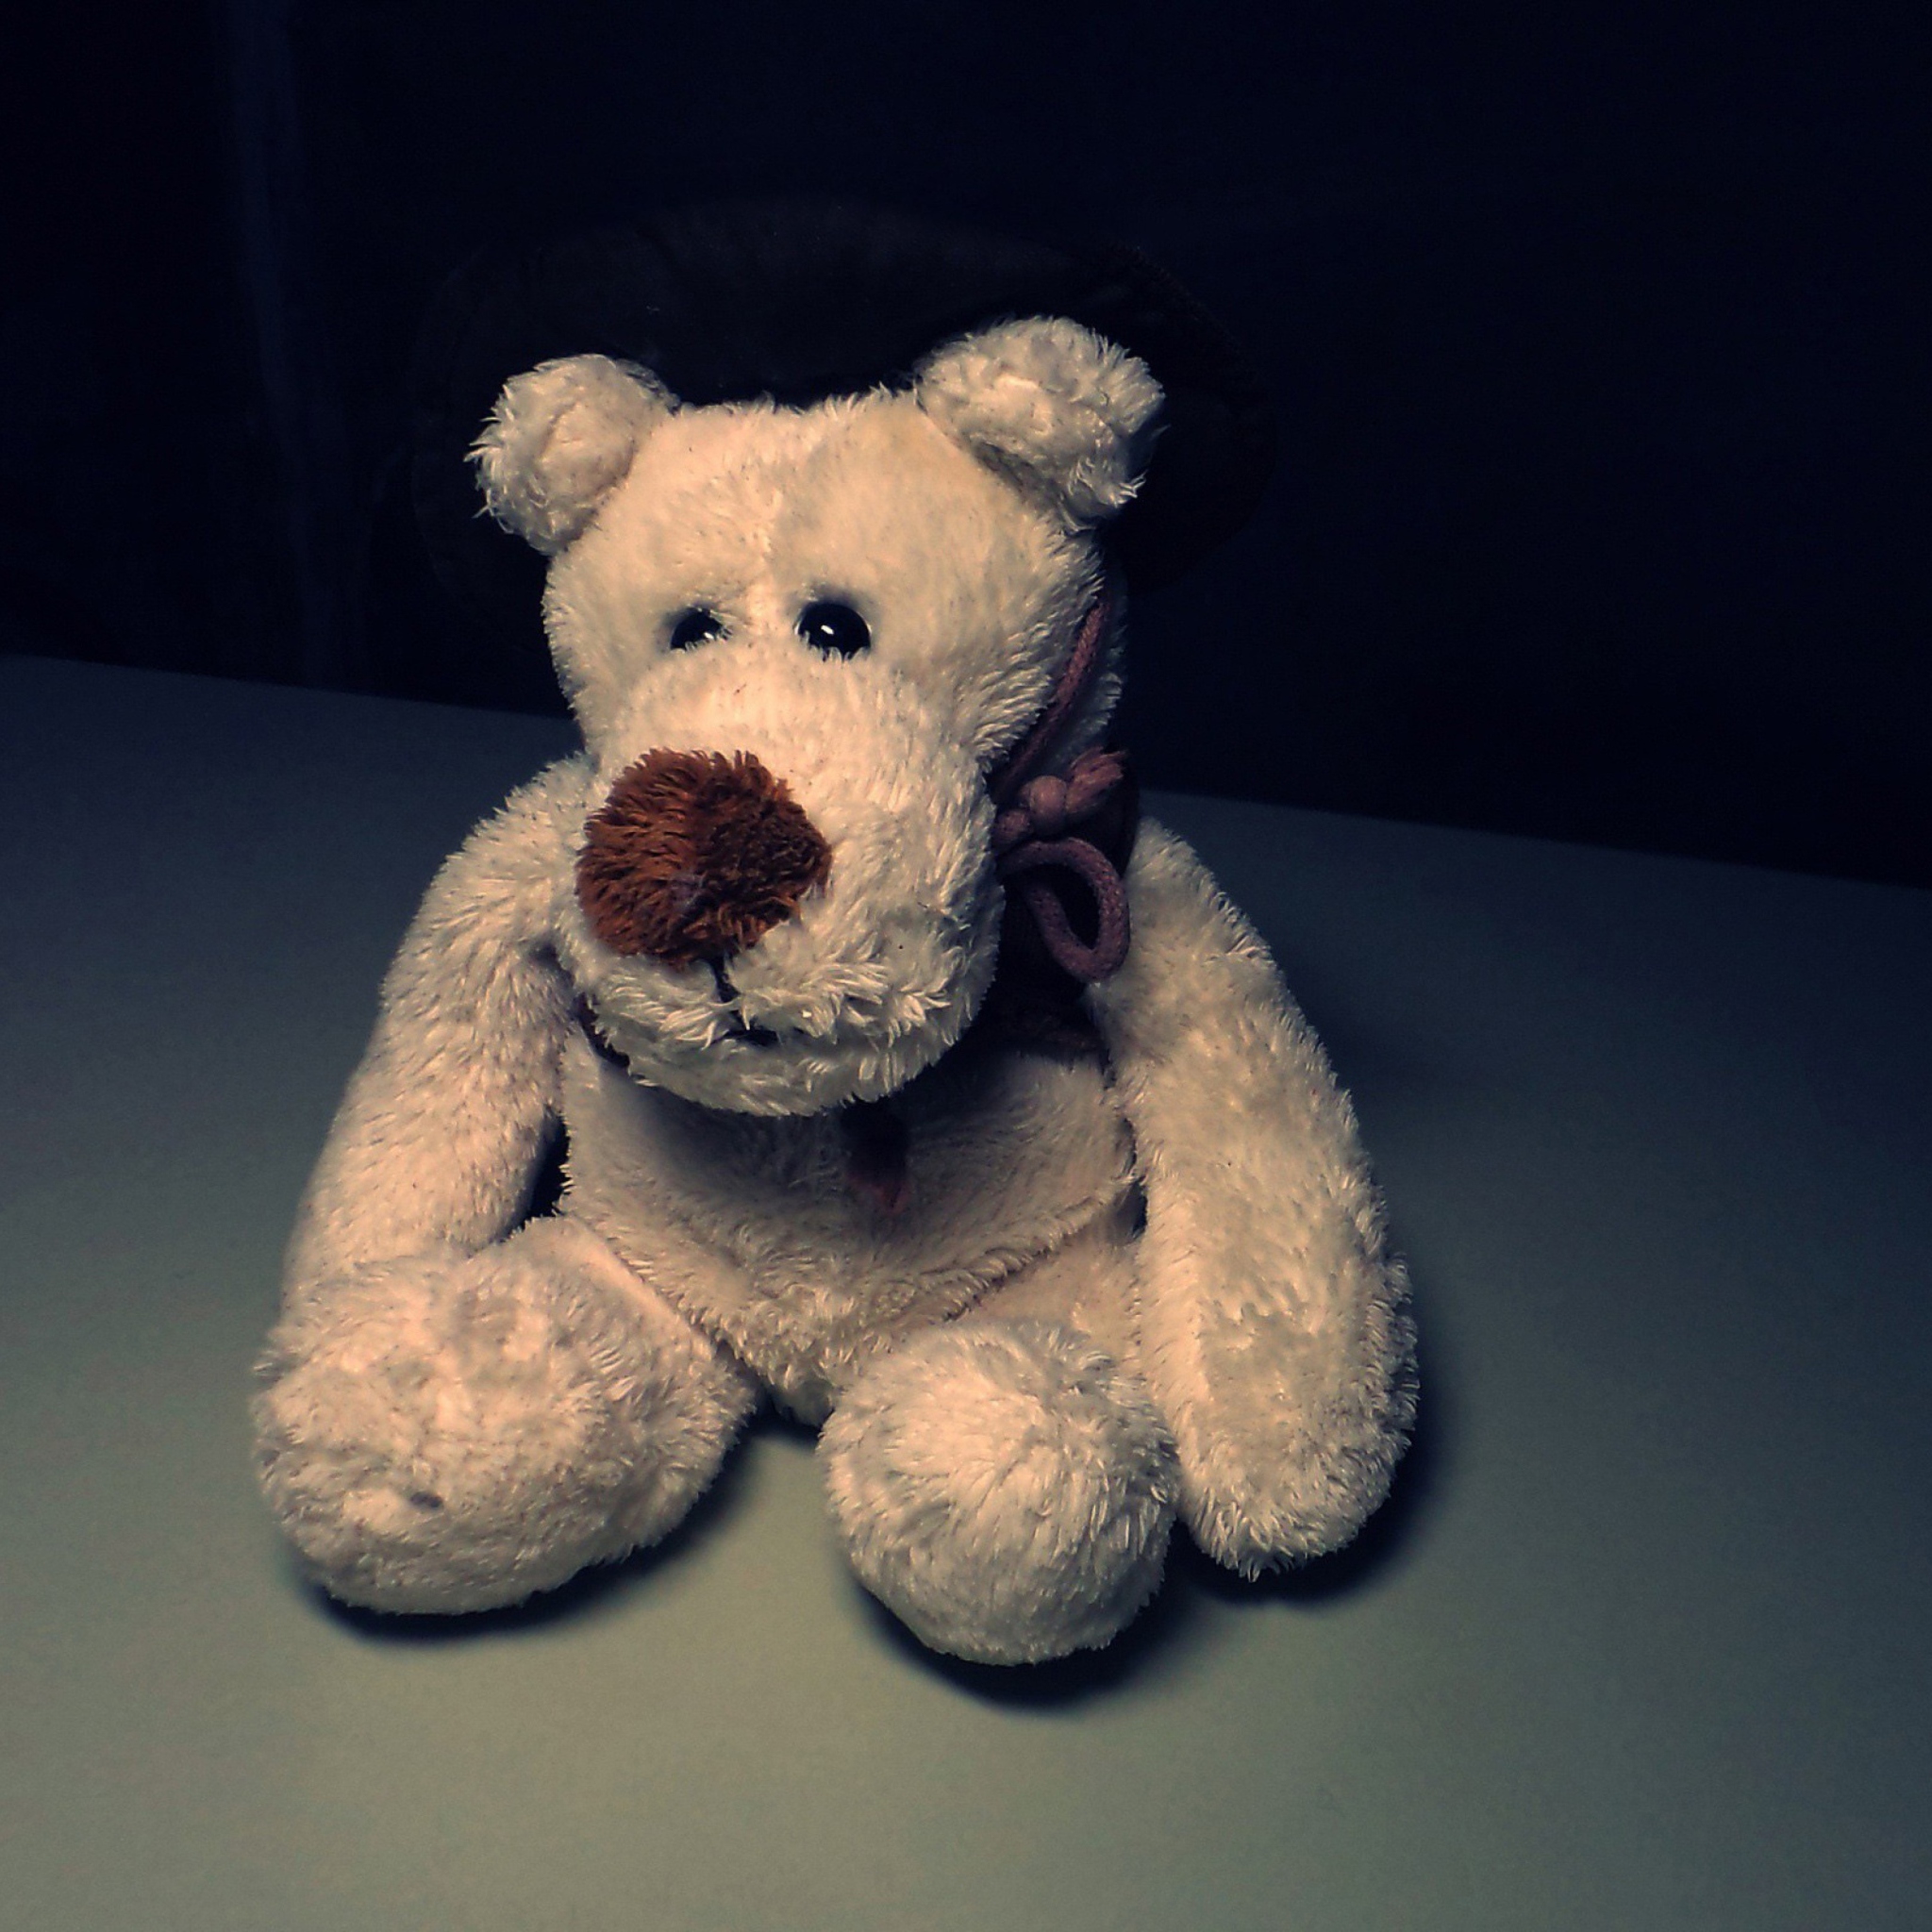 Sad Teddy Bear Sitting Alone wallpaper 2048x2048